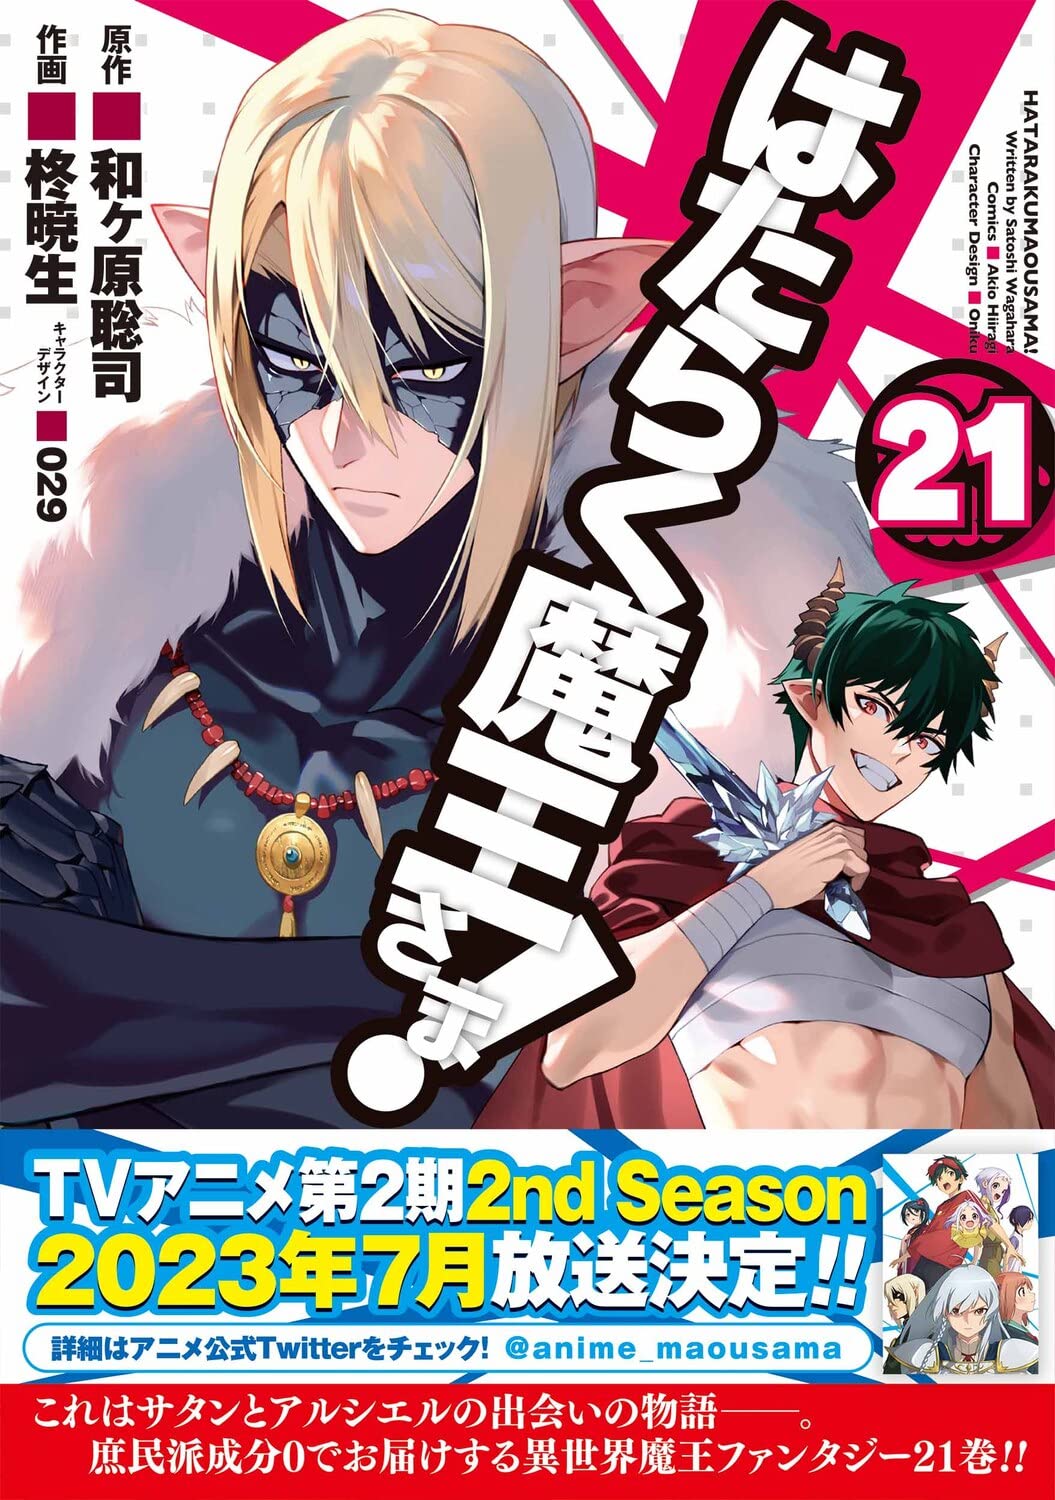 The Devil is a Part-Timer! Season 2 or Hataraku Maou-sama!! Cover